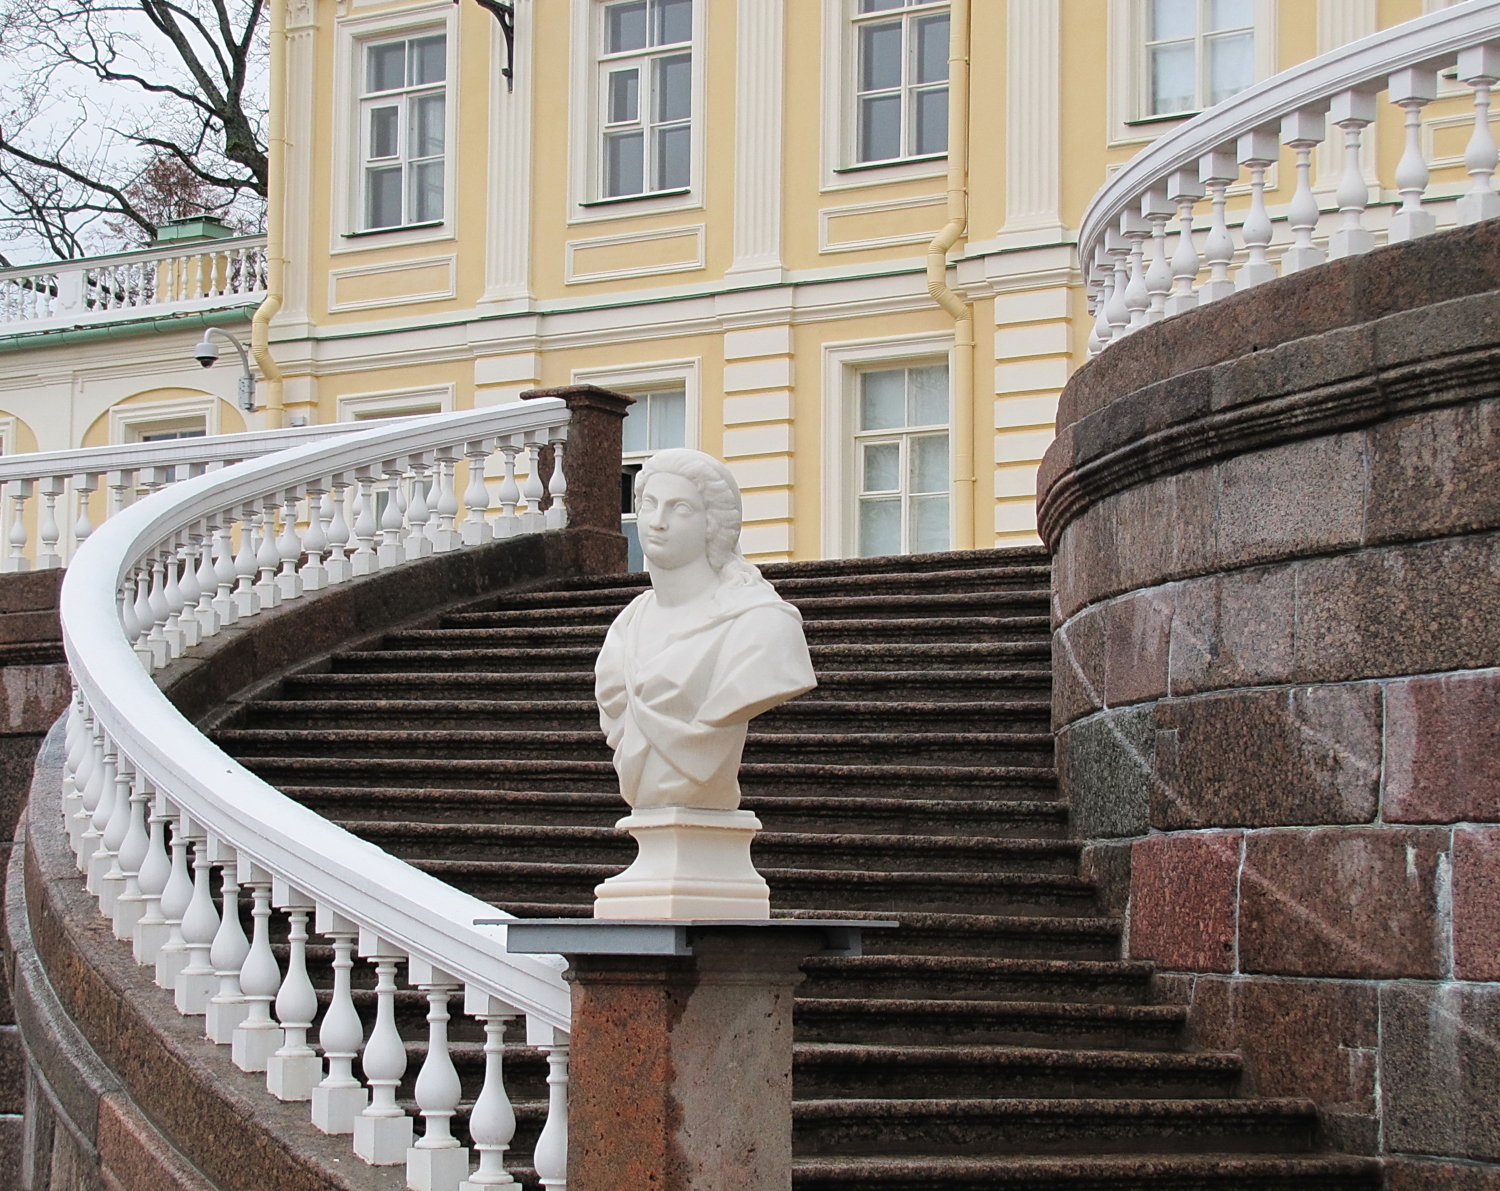 Дворцовая лестница